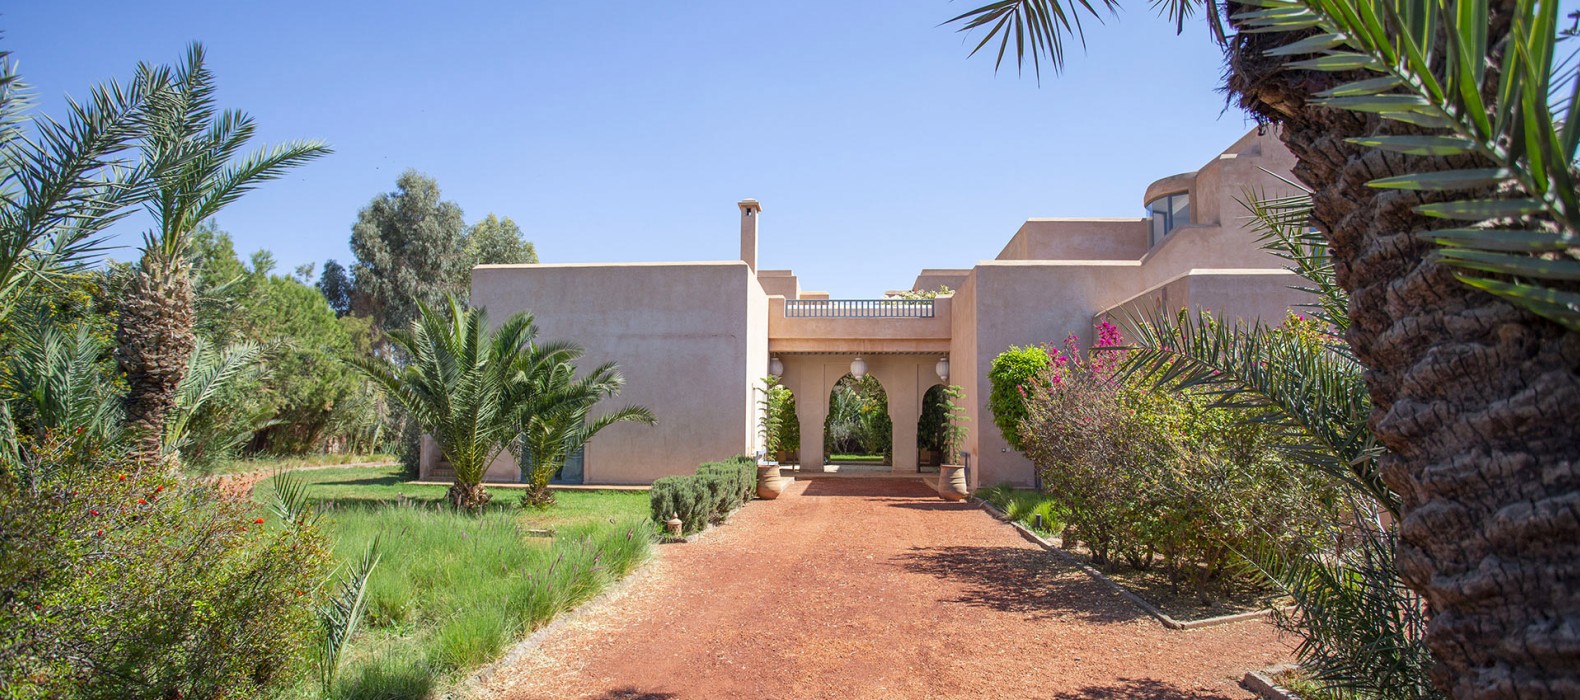 Entrance view of Villa Gauthier in Marrakech